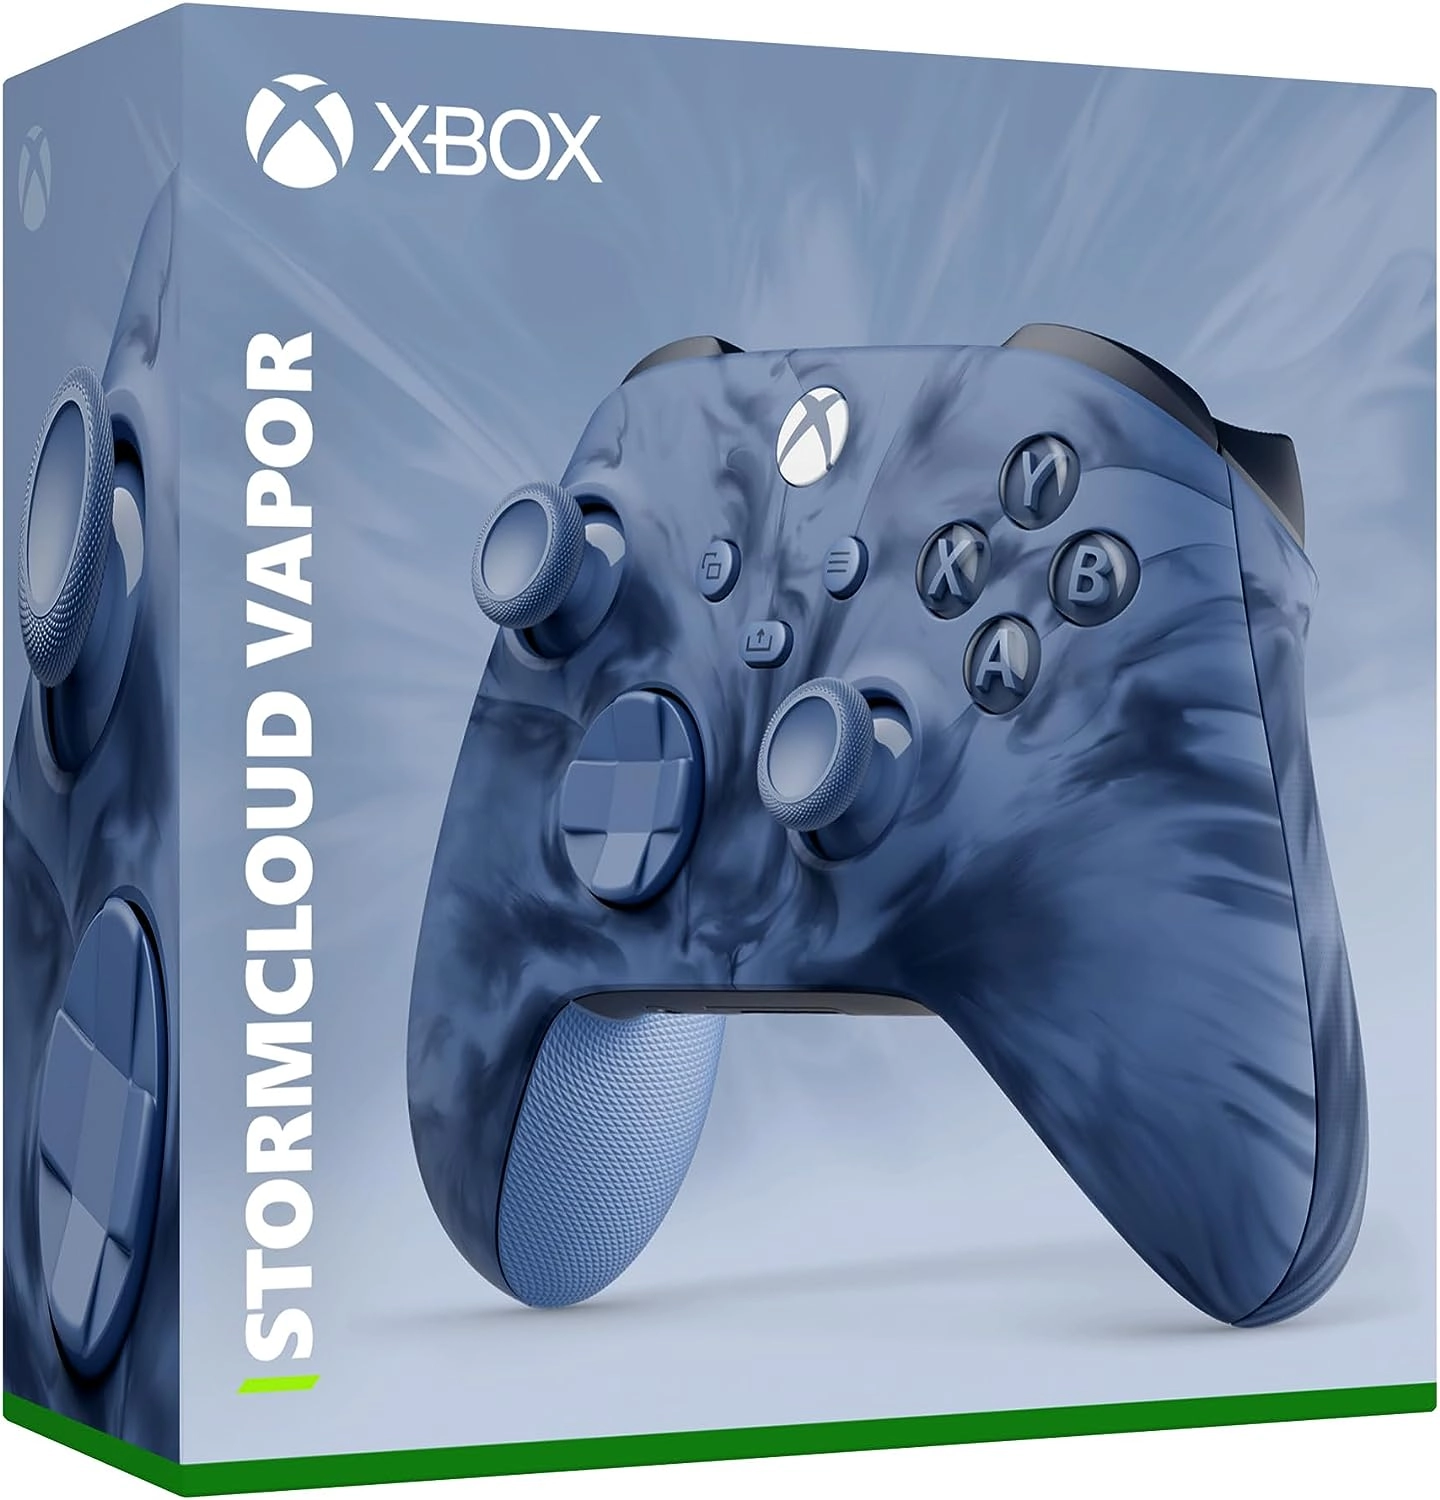 Xbox Wireless Controller Stormcloud Vapor Special Edition (QAU-00130)